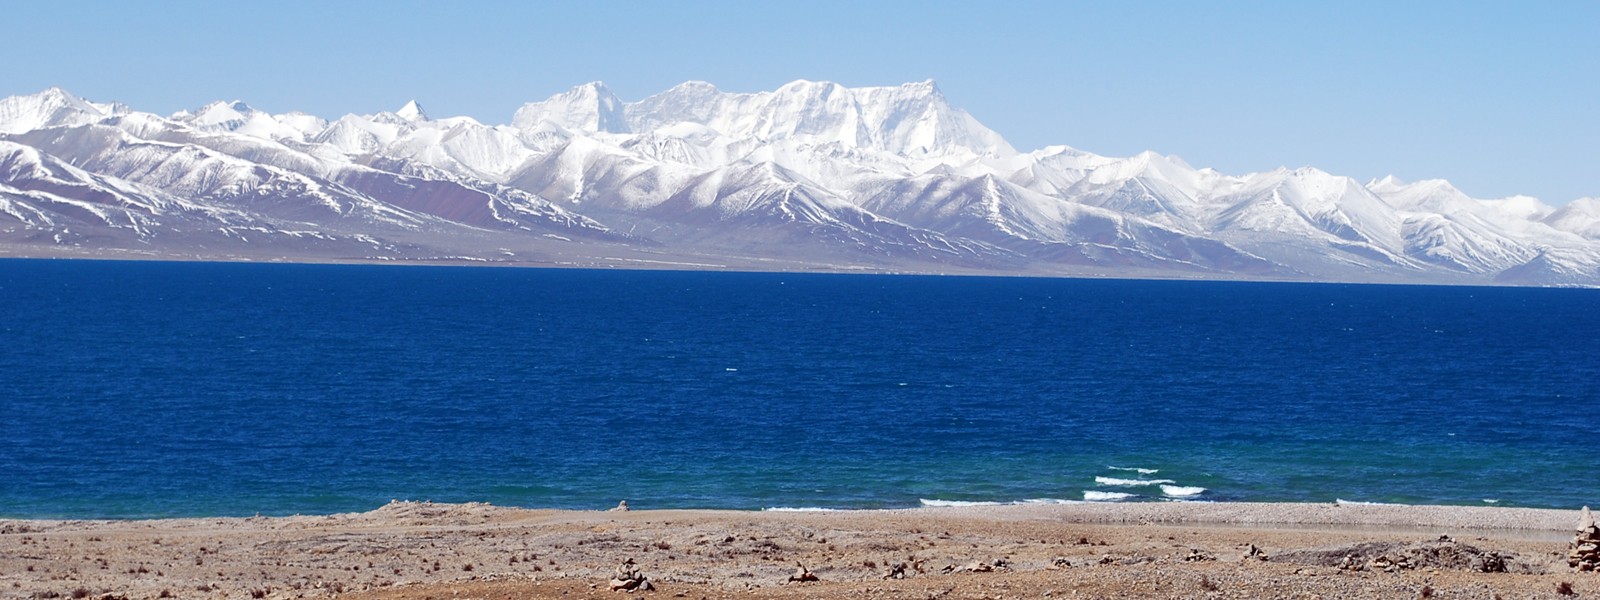 Lhasa, Mt. Kailash and Guge Kingdom